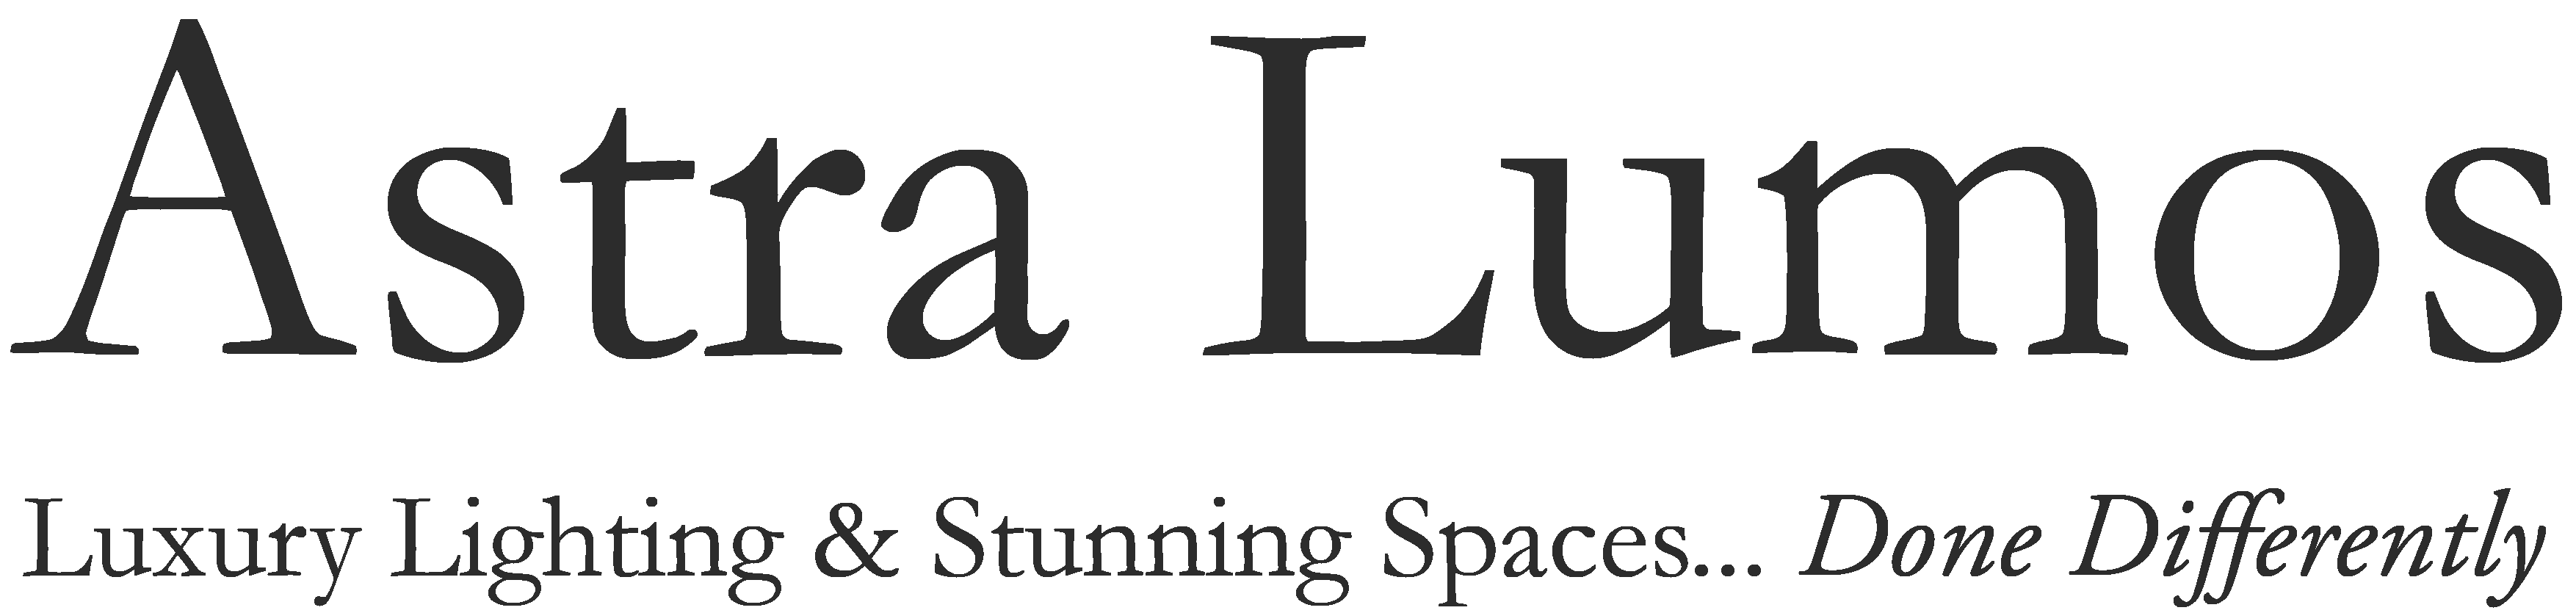 Astra Lumos Logo With Strapline full